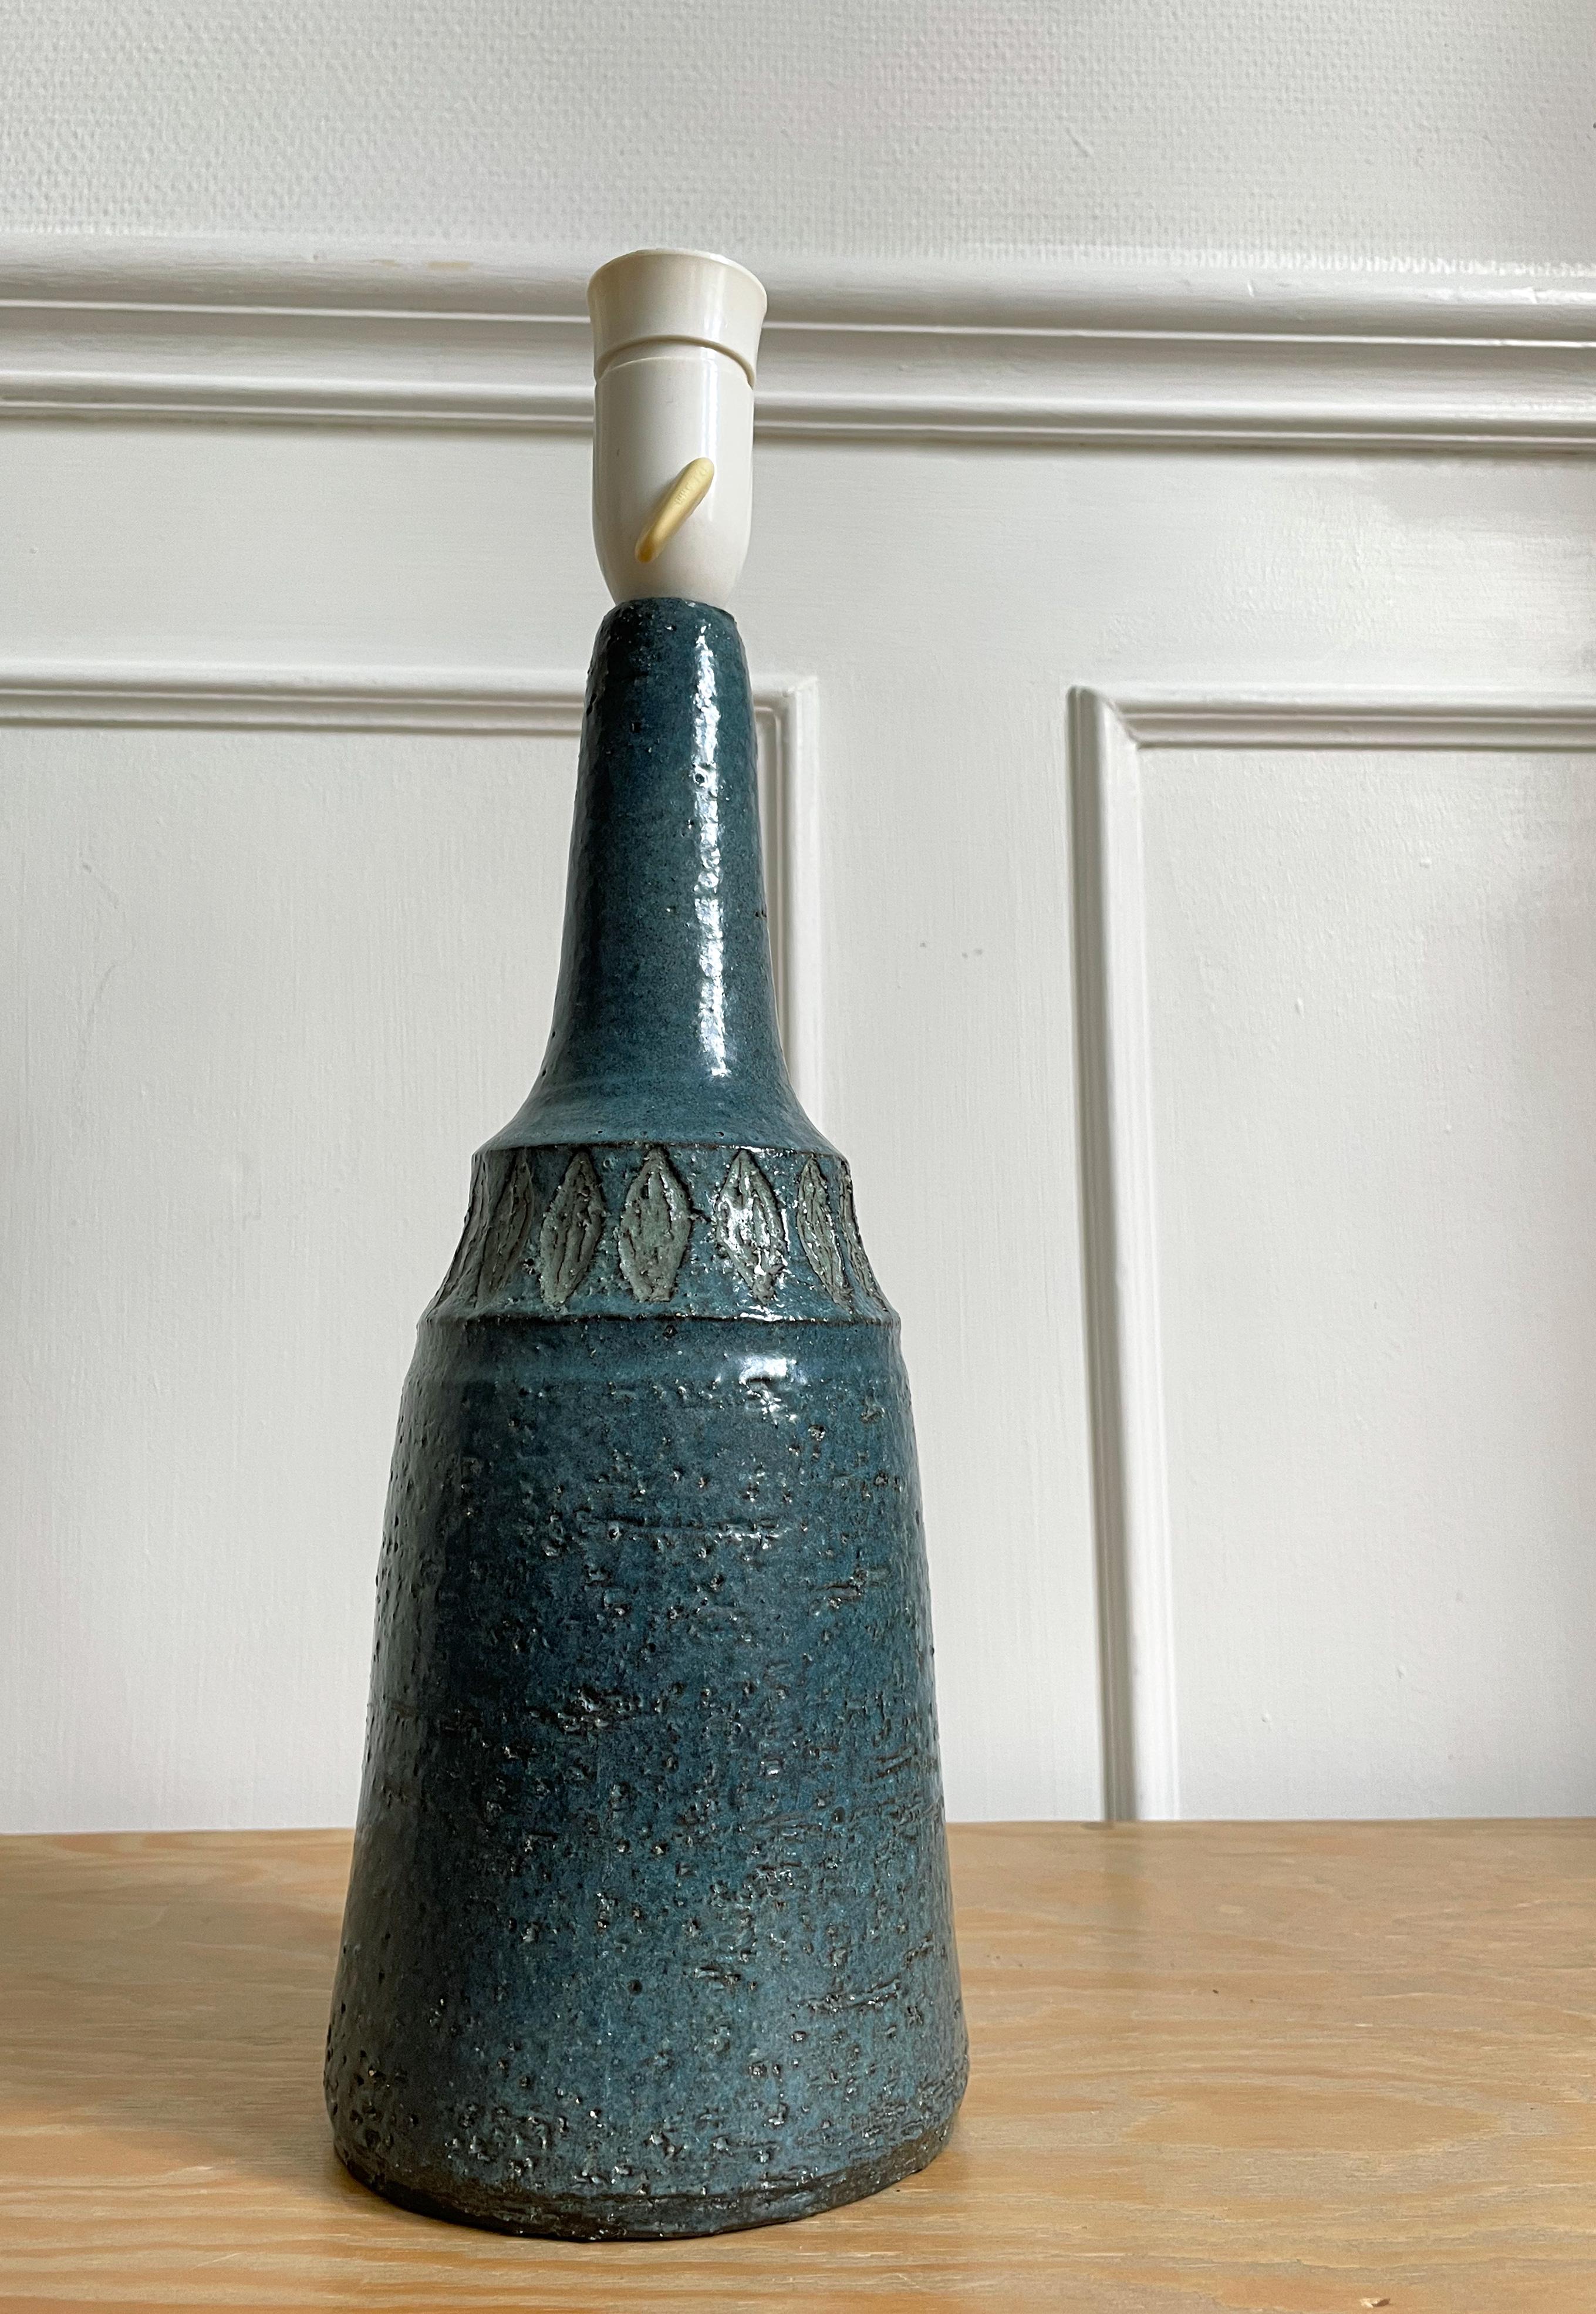 Danish Modern Teal Glazed Ceramic Table Lamp, 1960s In Good Condition For Sale In Copenhagen, DK